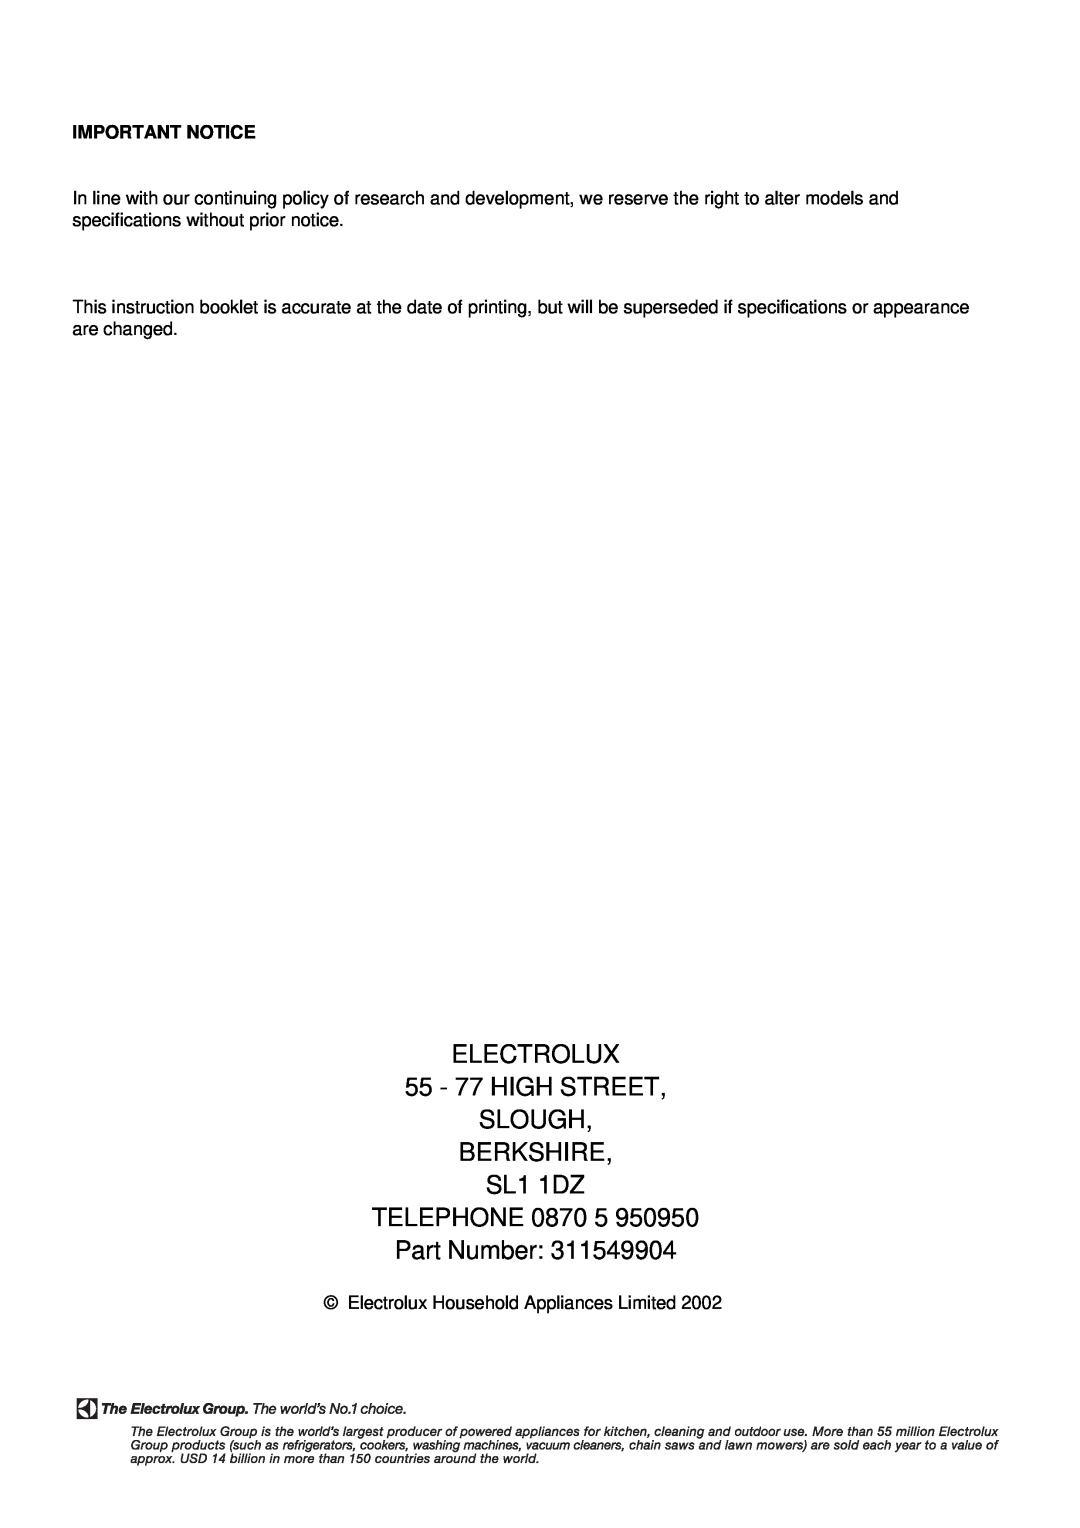 Electrolux EDB705 ELECTROLUX 55 - 77 HIGH STREET SLOUGH BERKSHIRE SL1 1DZ, TELEPHONE 0870 5 Part Number, Important Notice 